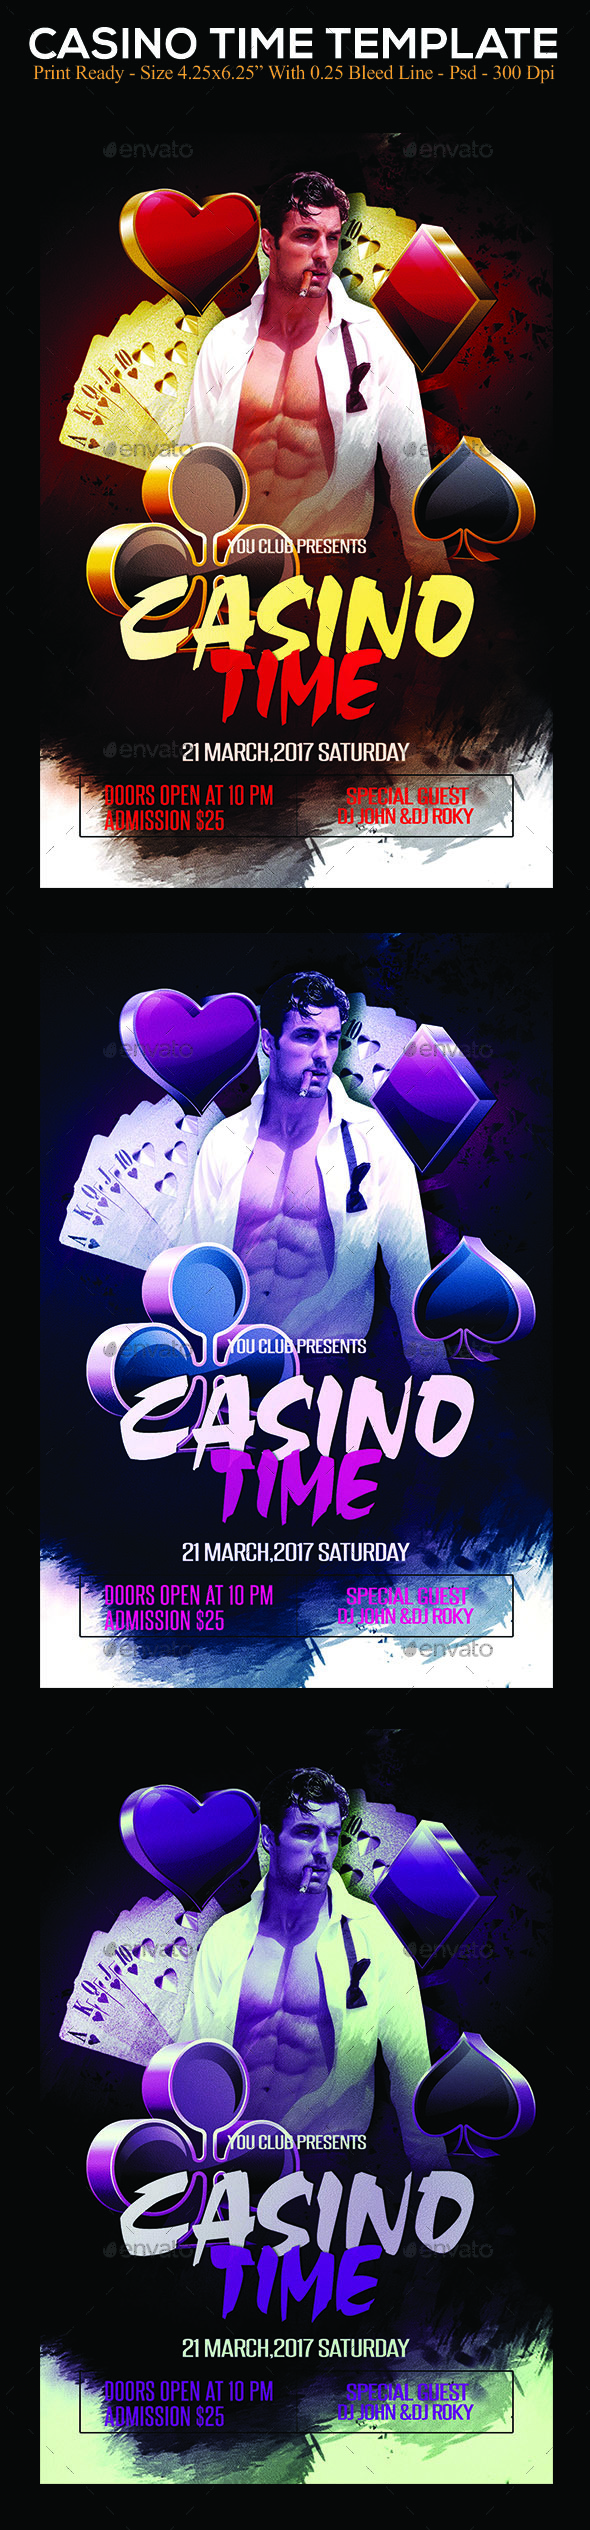 Casino Time